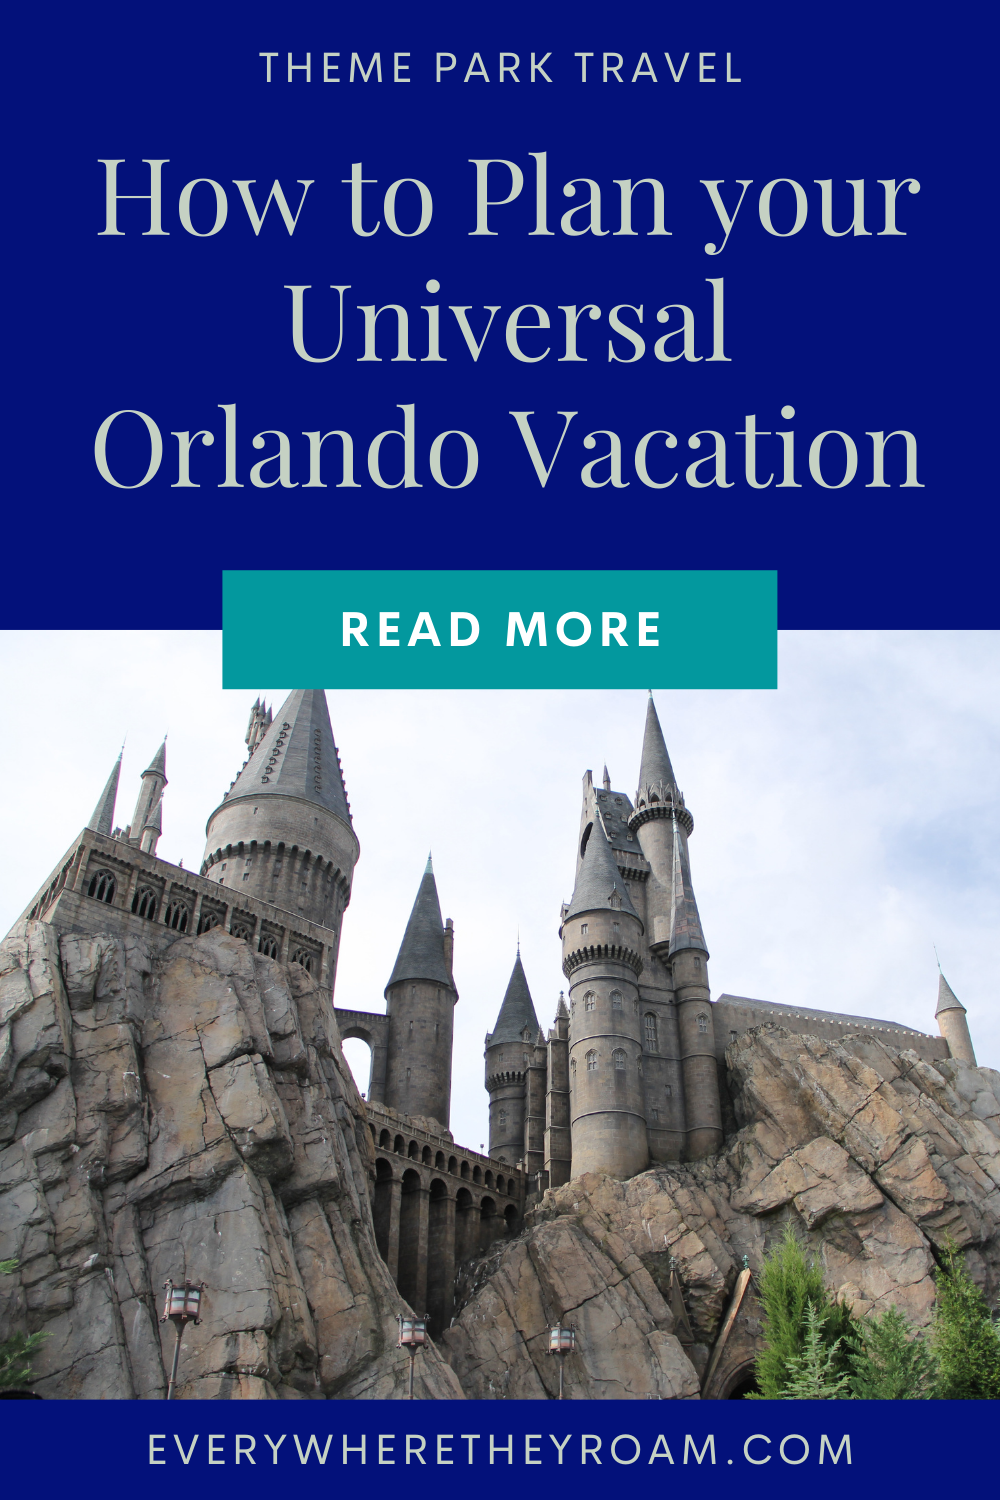 Pinterest thumbnail showing Hogwarts Castle at Universal Orlando.